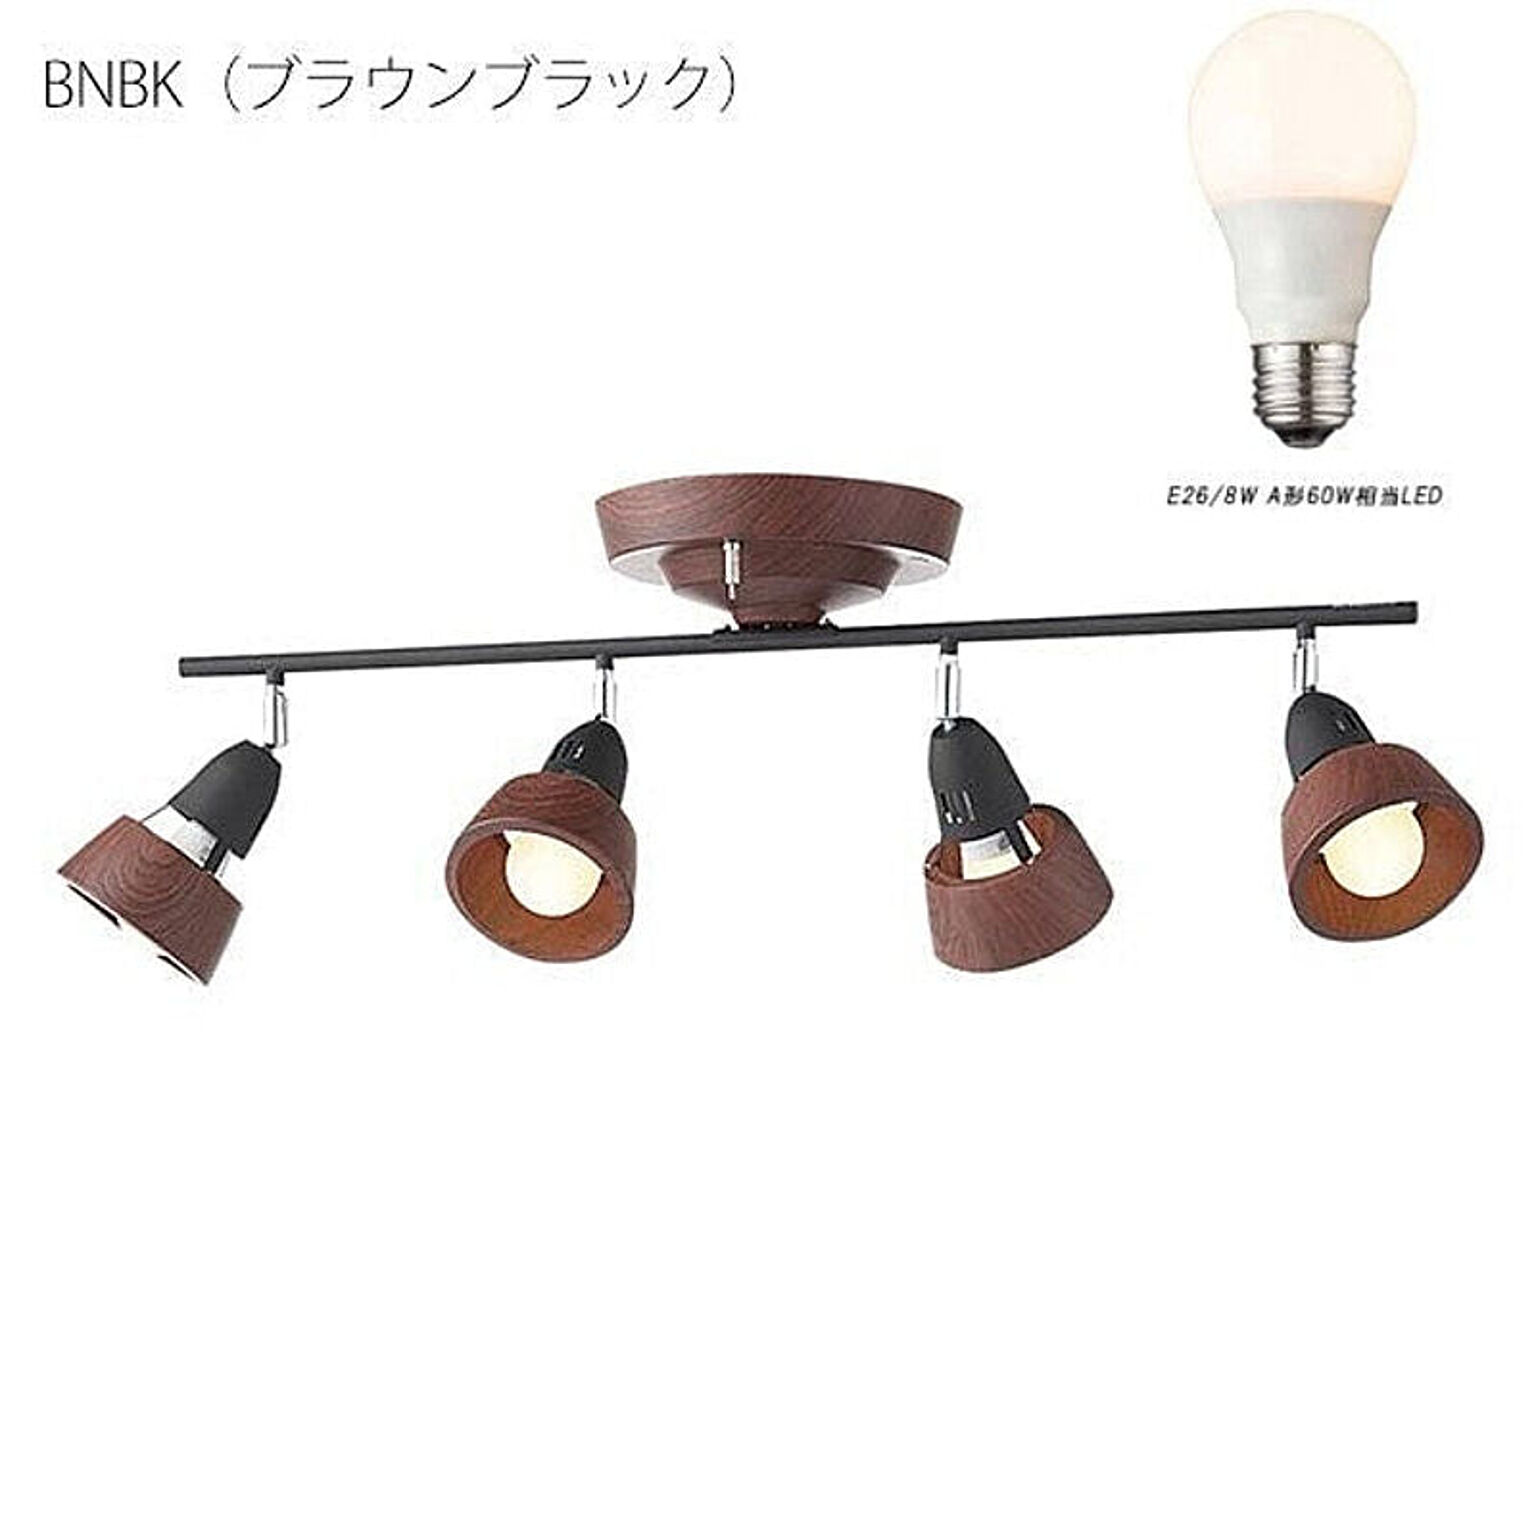 ARTWORKSTUDIO リモコン付きシーリングランプ 4灯 ベーシック 5色 スポットライト BN BK 8W A形LED電球